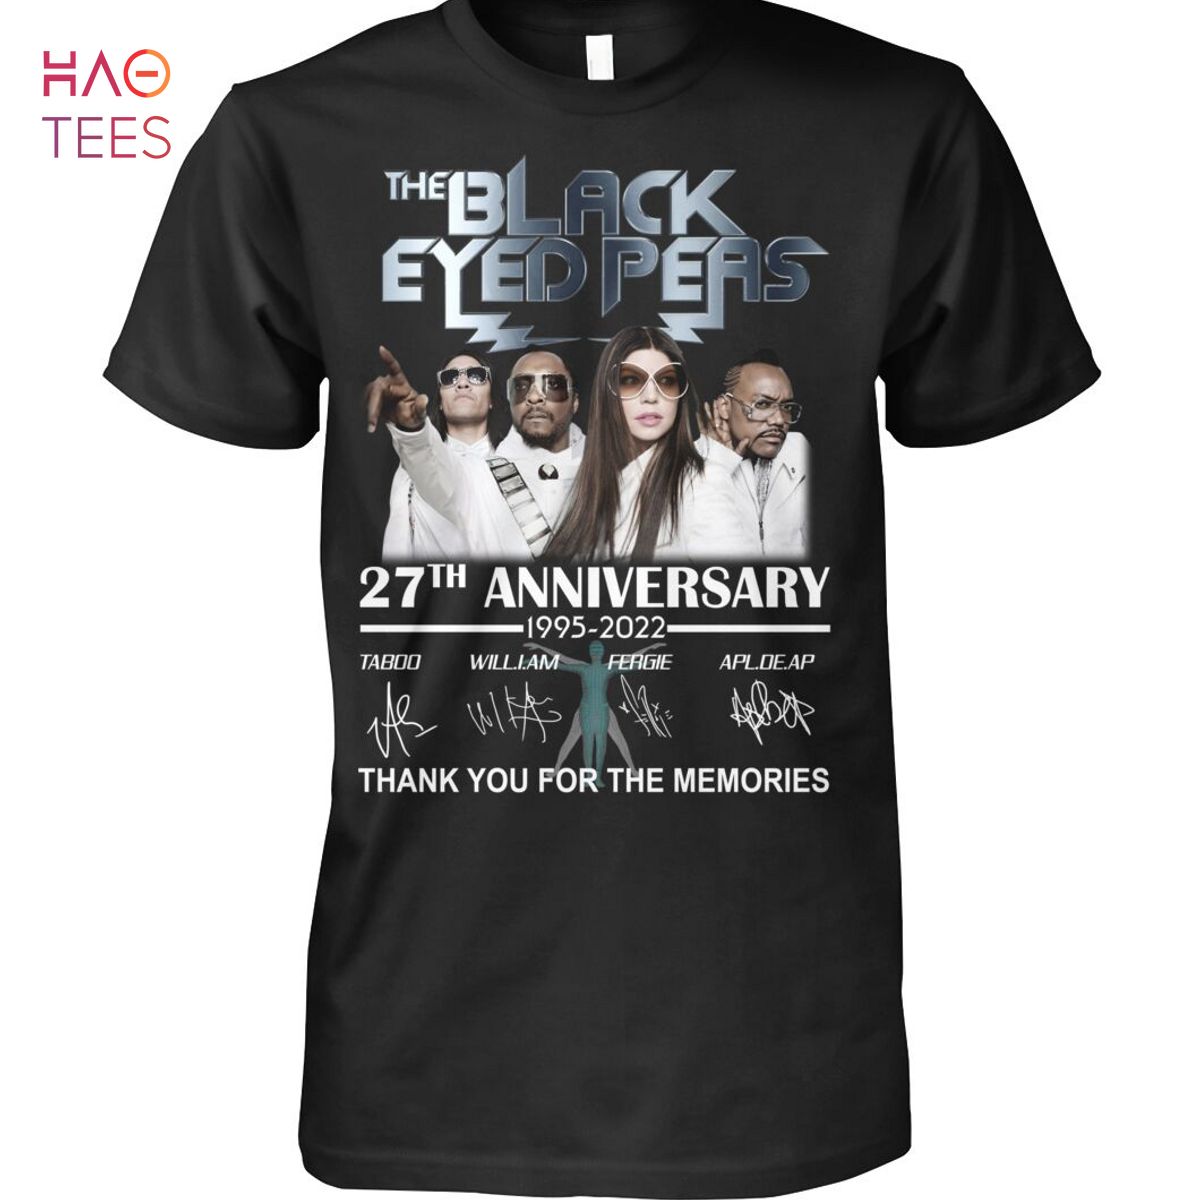 The Black Eyedpeas 27 Anniversary Shirt